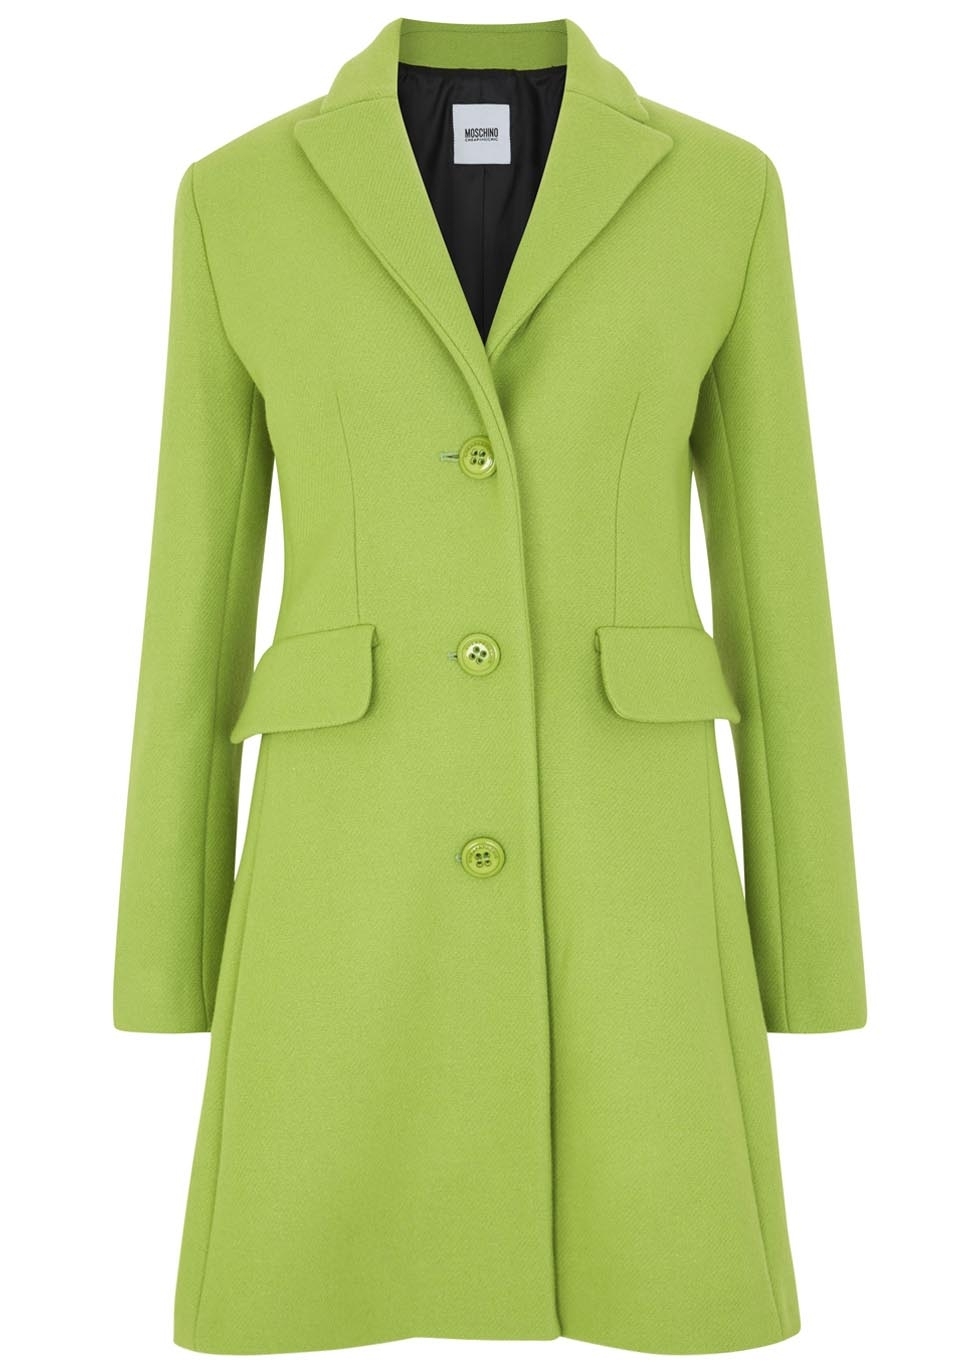 Lime green wool blend coat